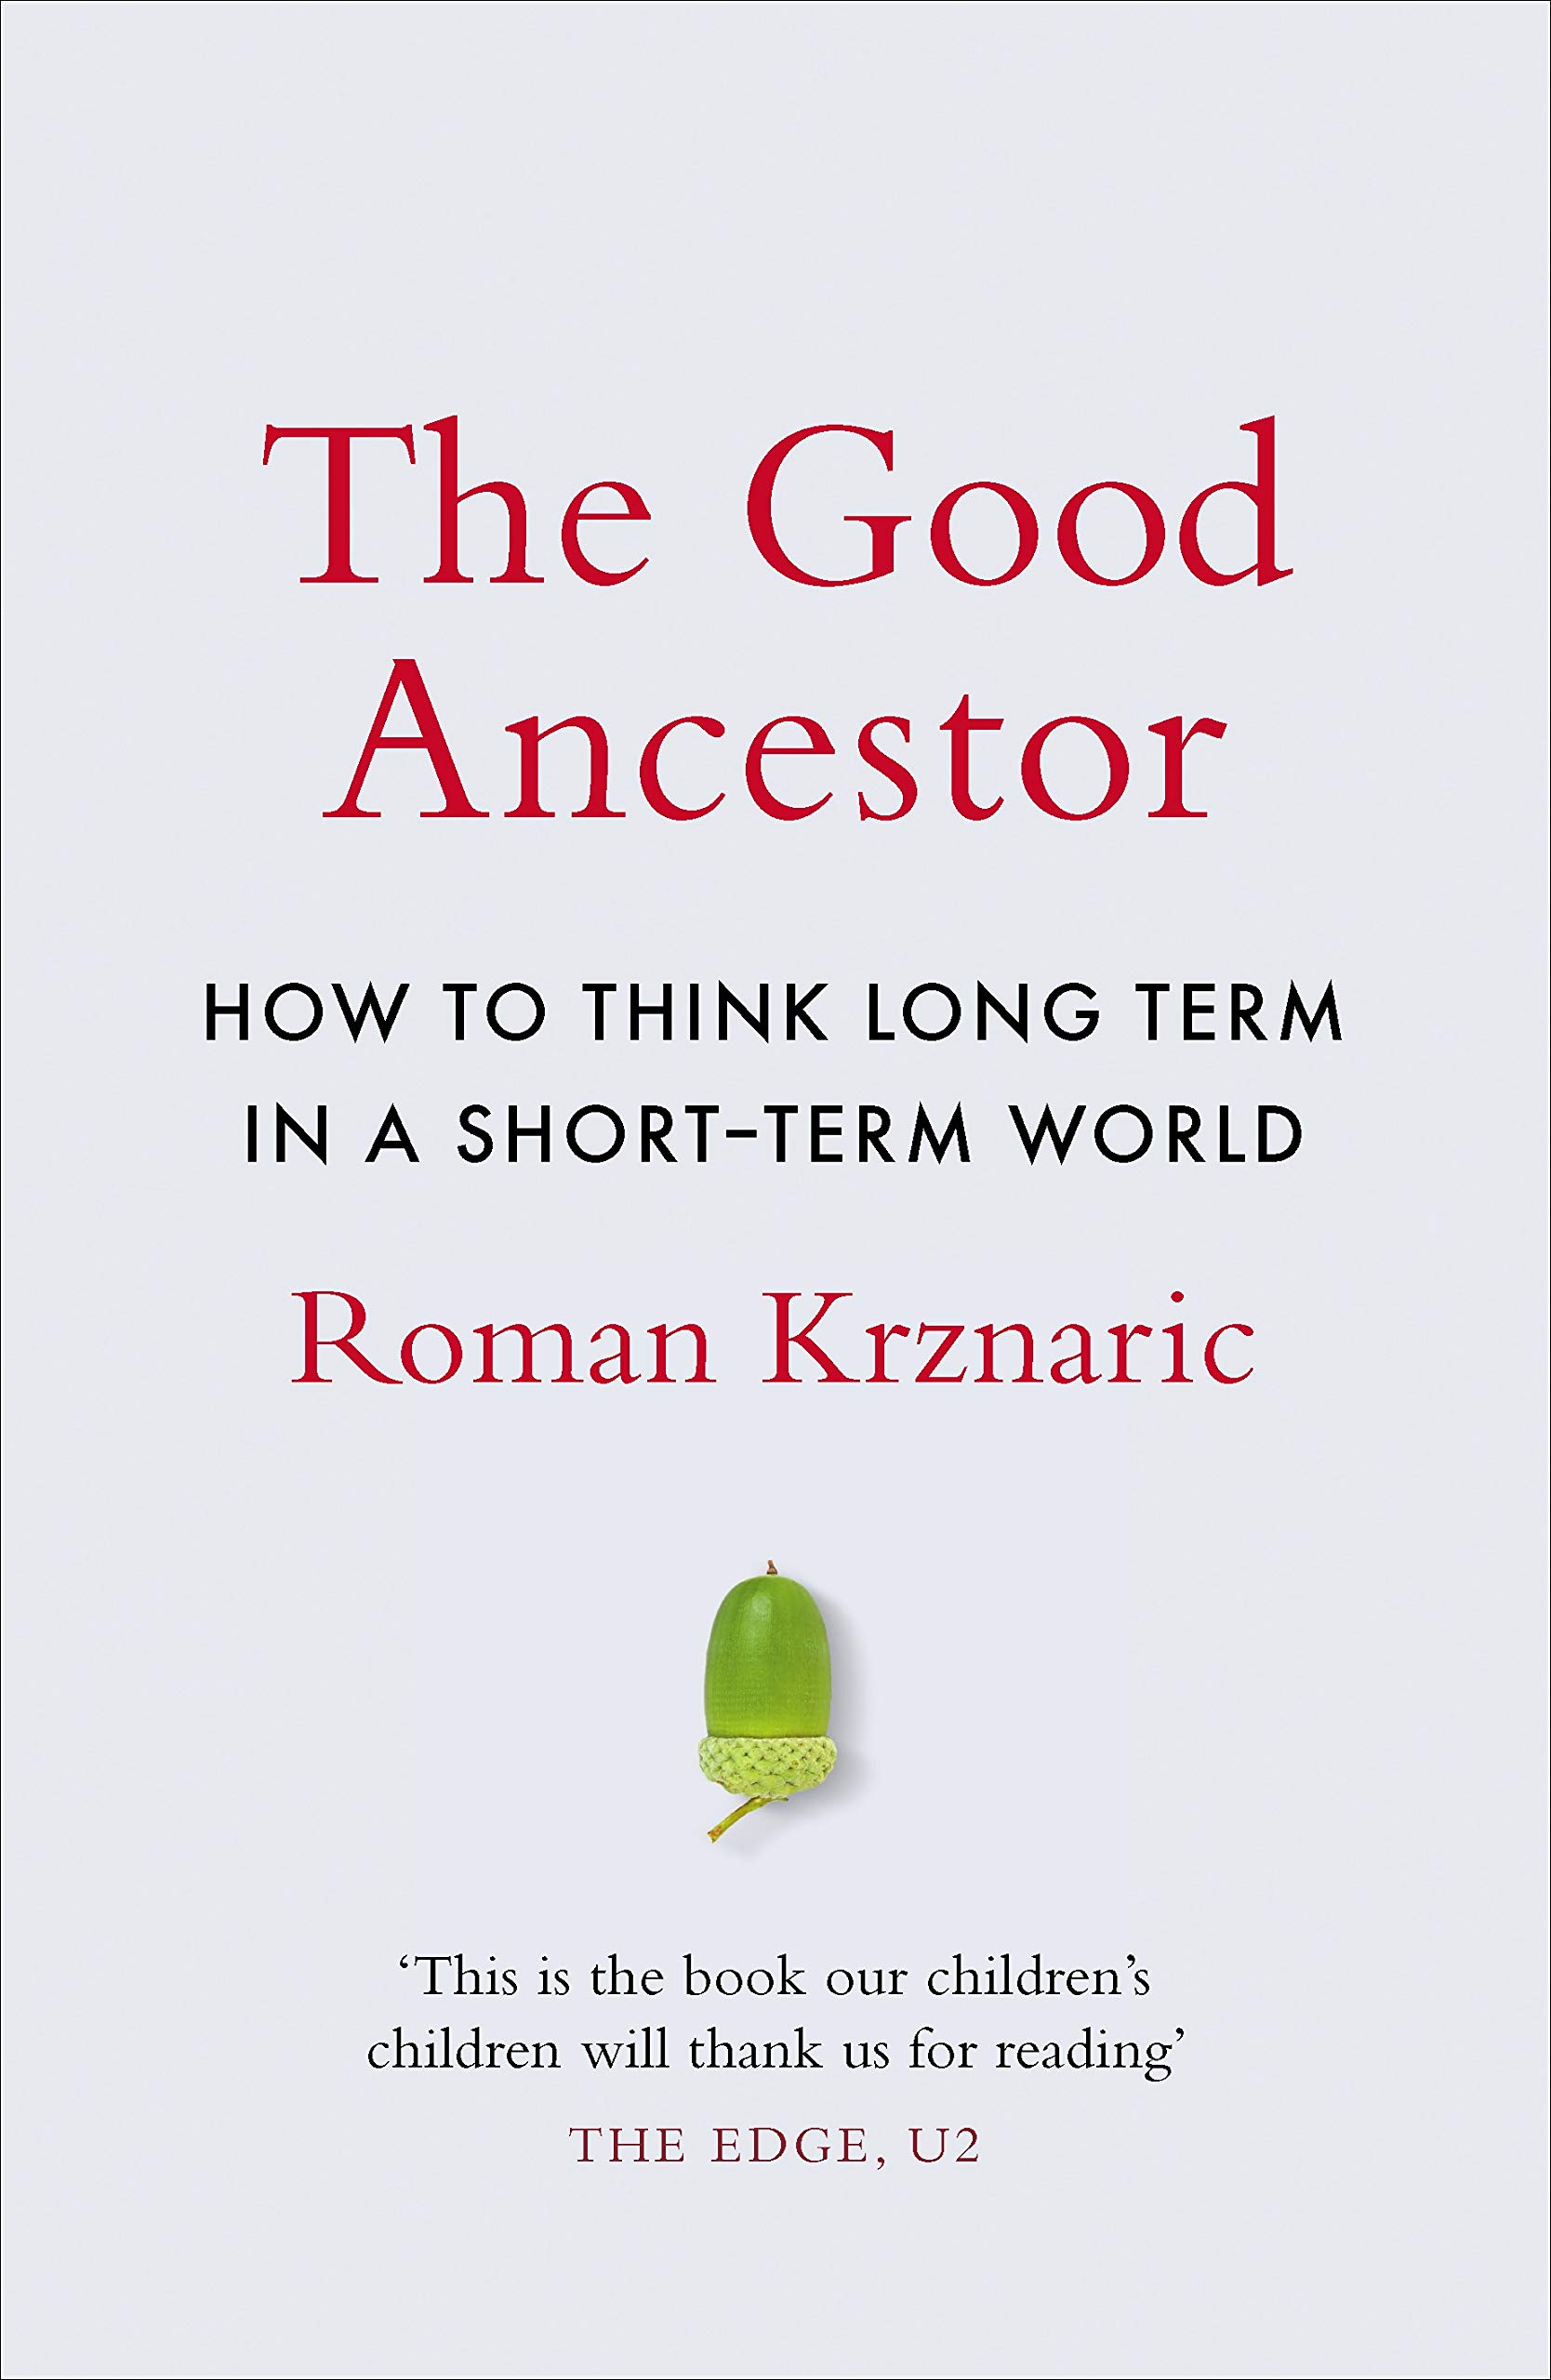 The Good Ancestor by Roman Krznaric